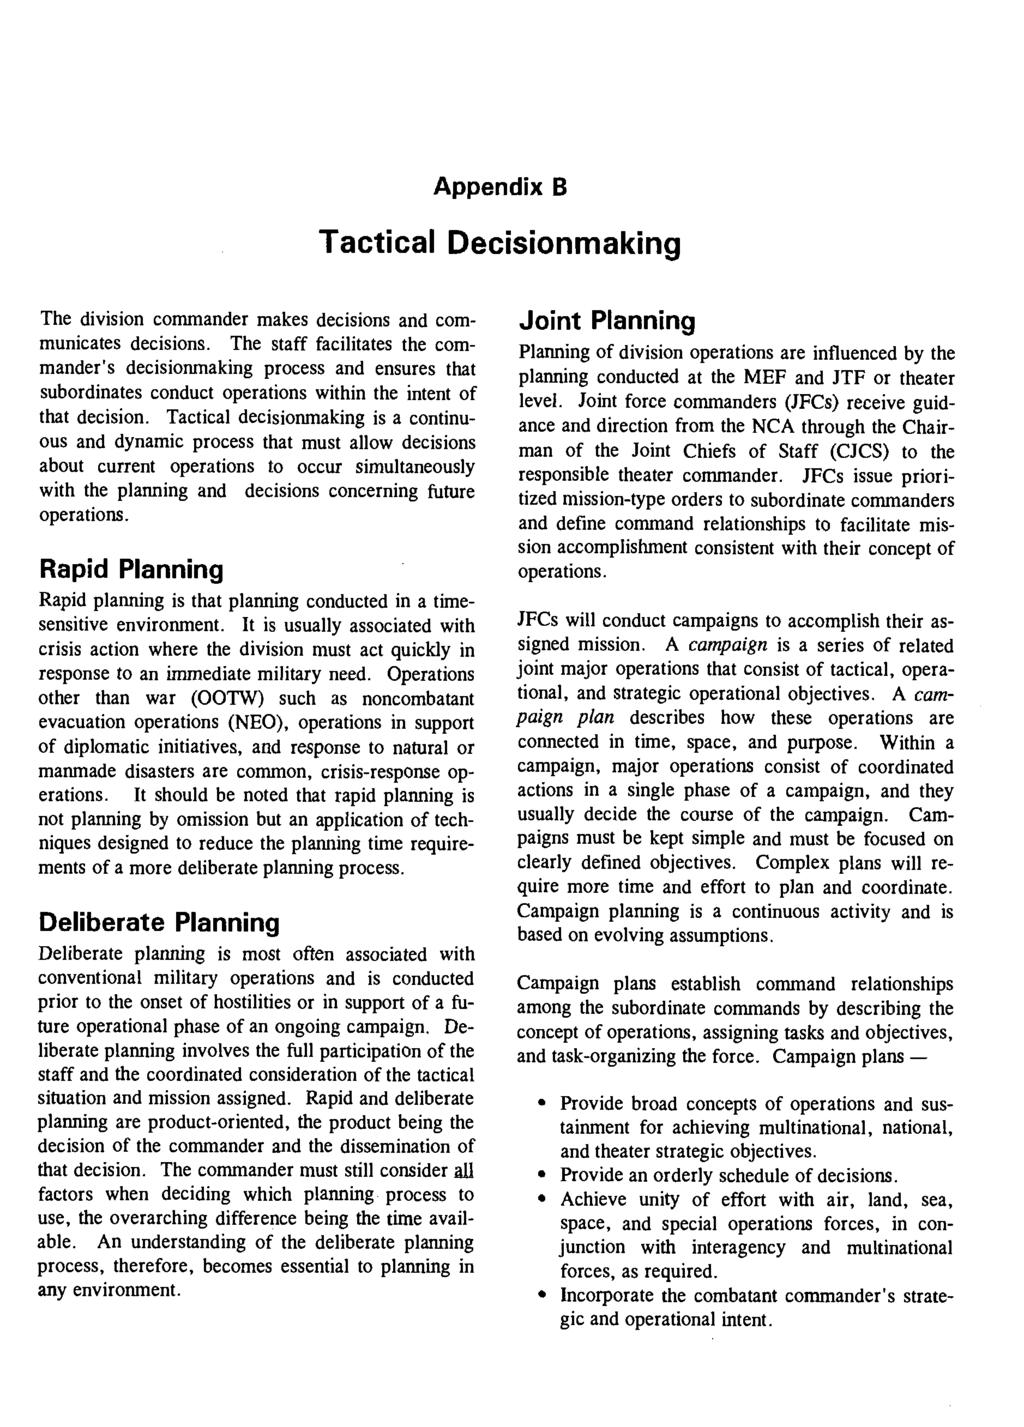 Appendix B Tactical Decisionmaking The division commander makes decisions and communicates decisions.